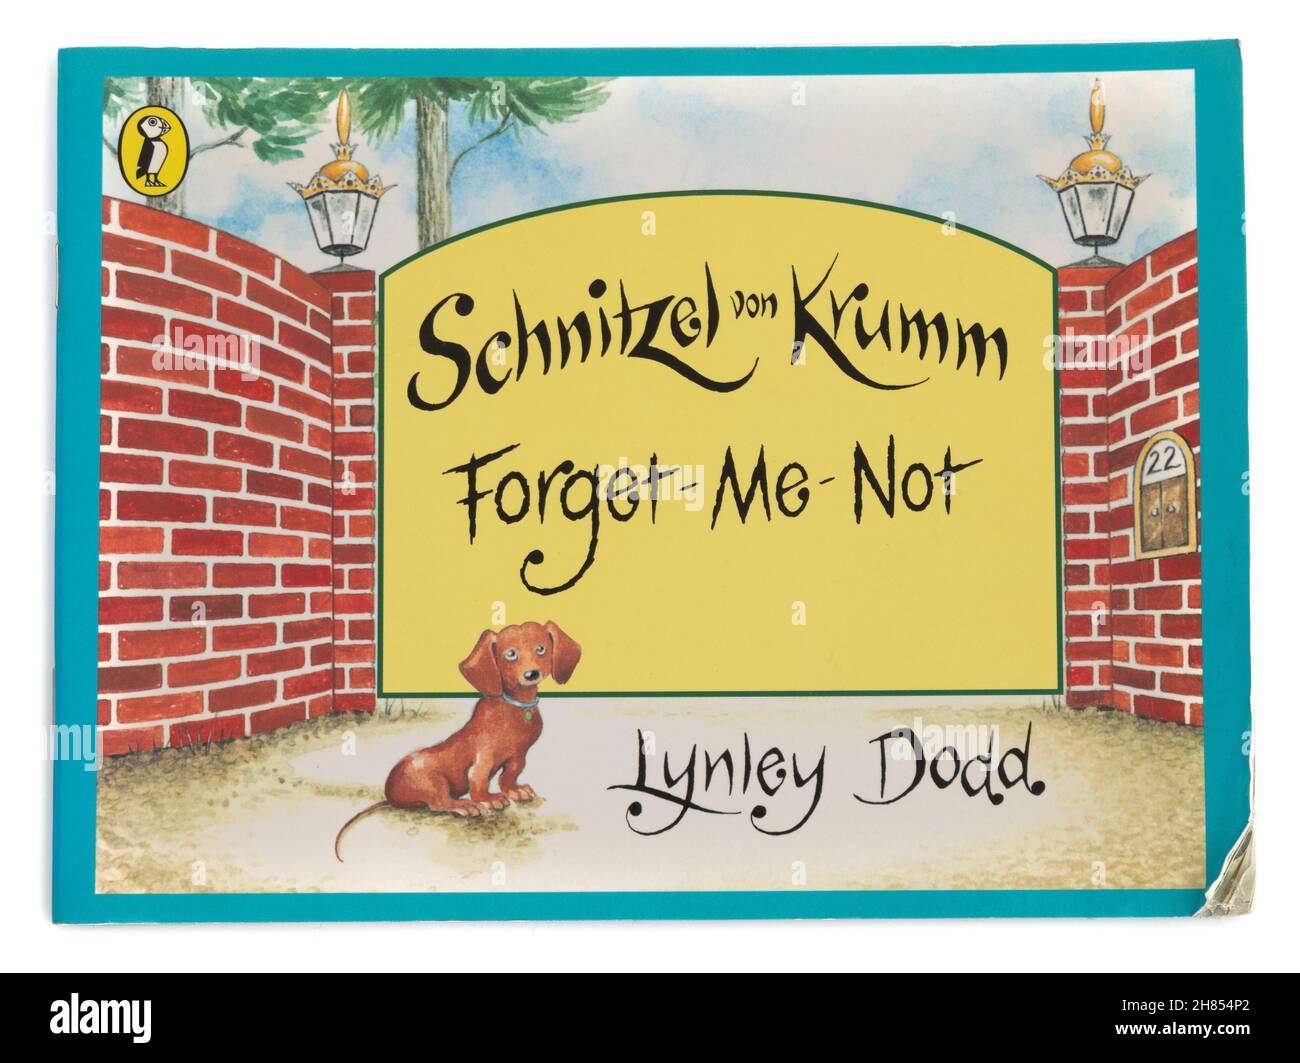 Schnitzel von Krumm Forget-me-not Picture book de Lynley Dodd Banque D'Images